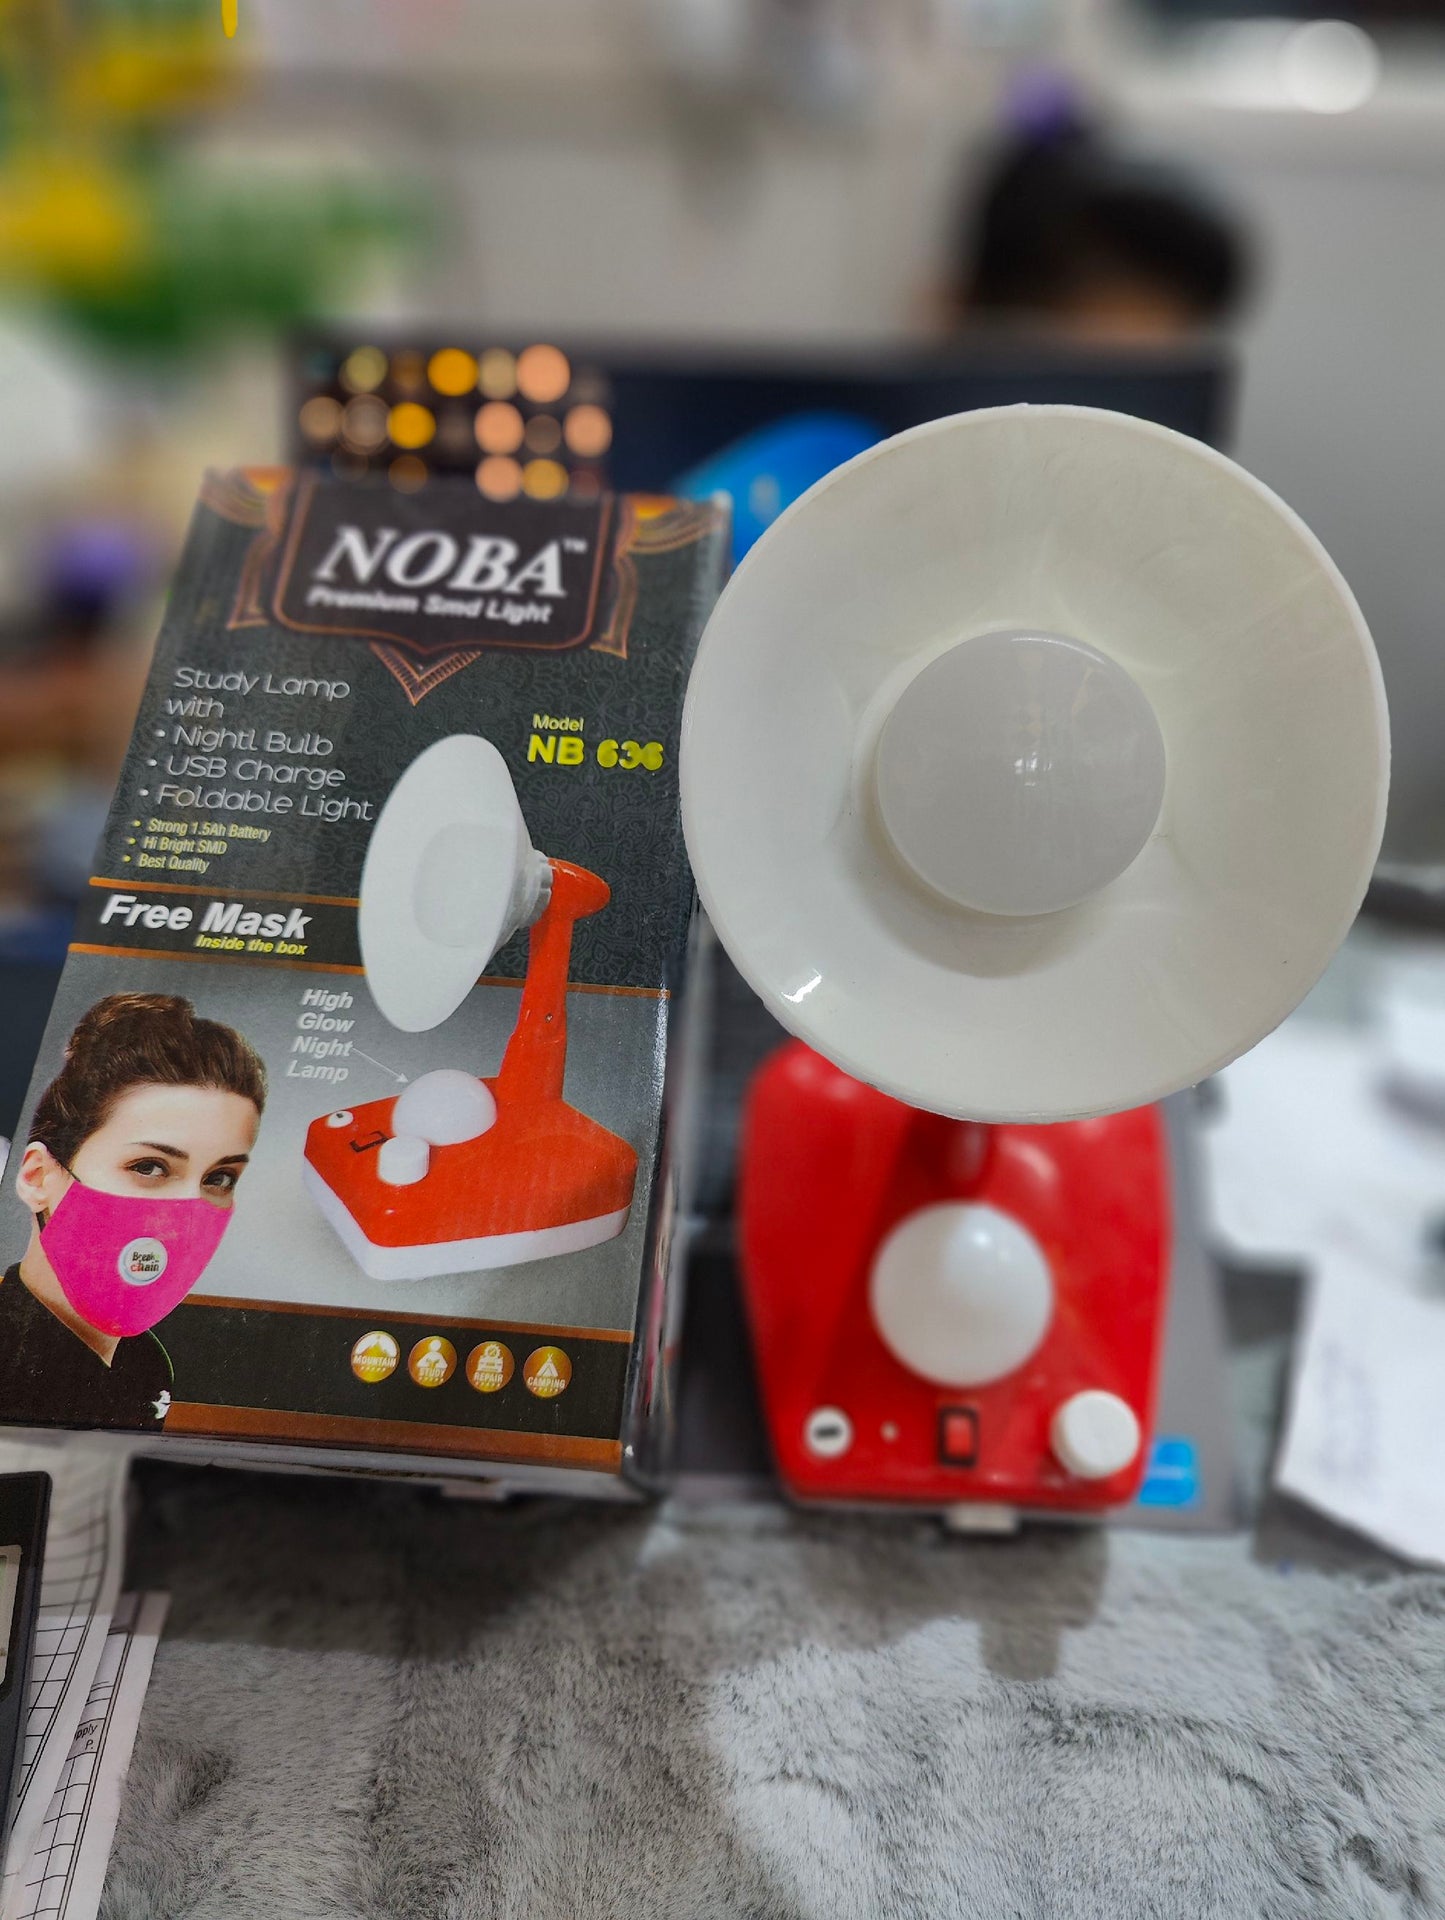 NOBA STUDY LAMP